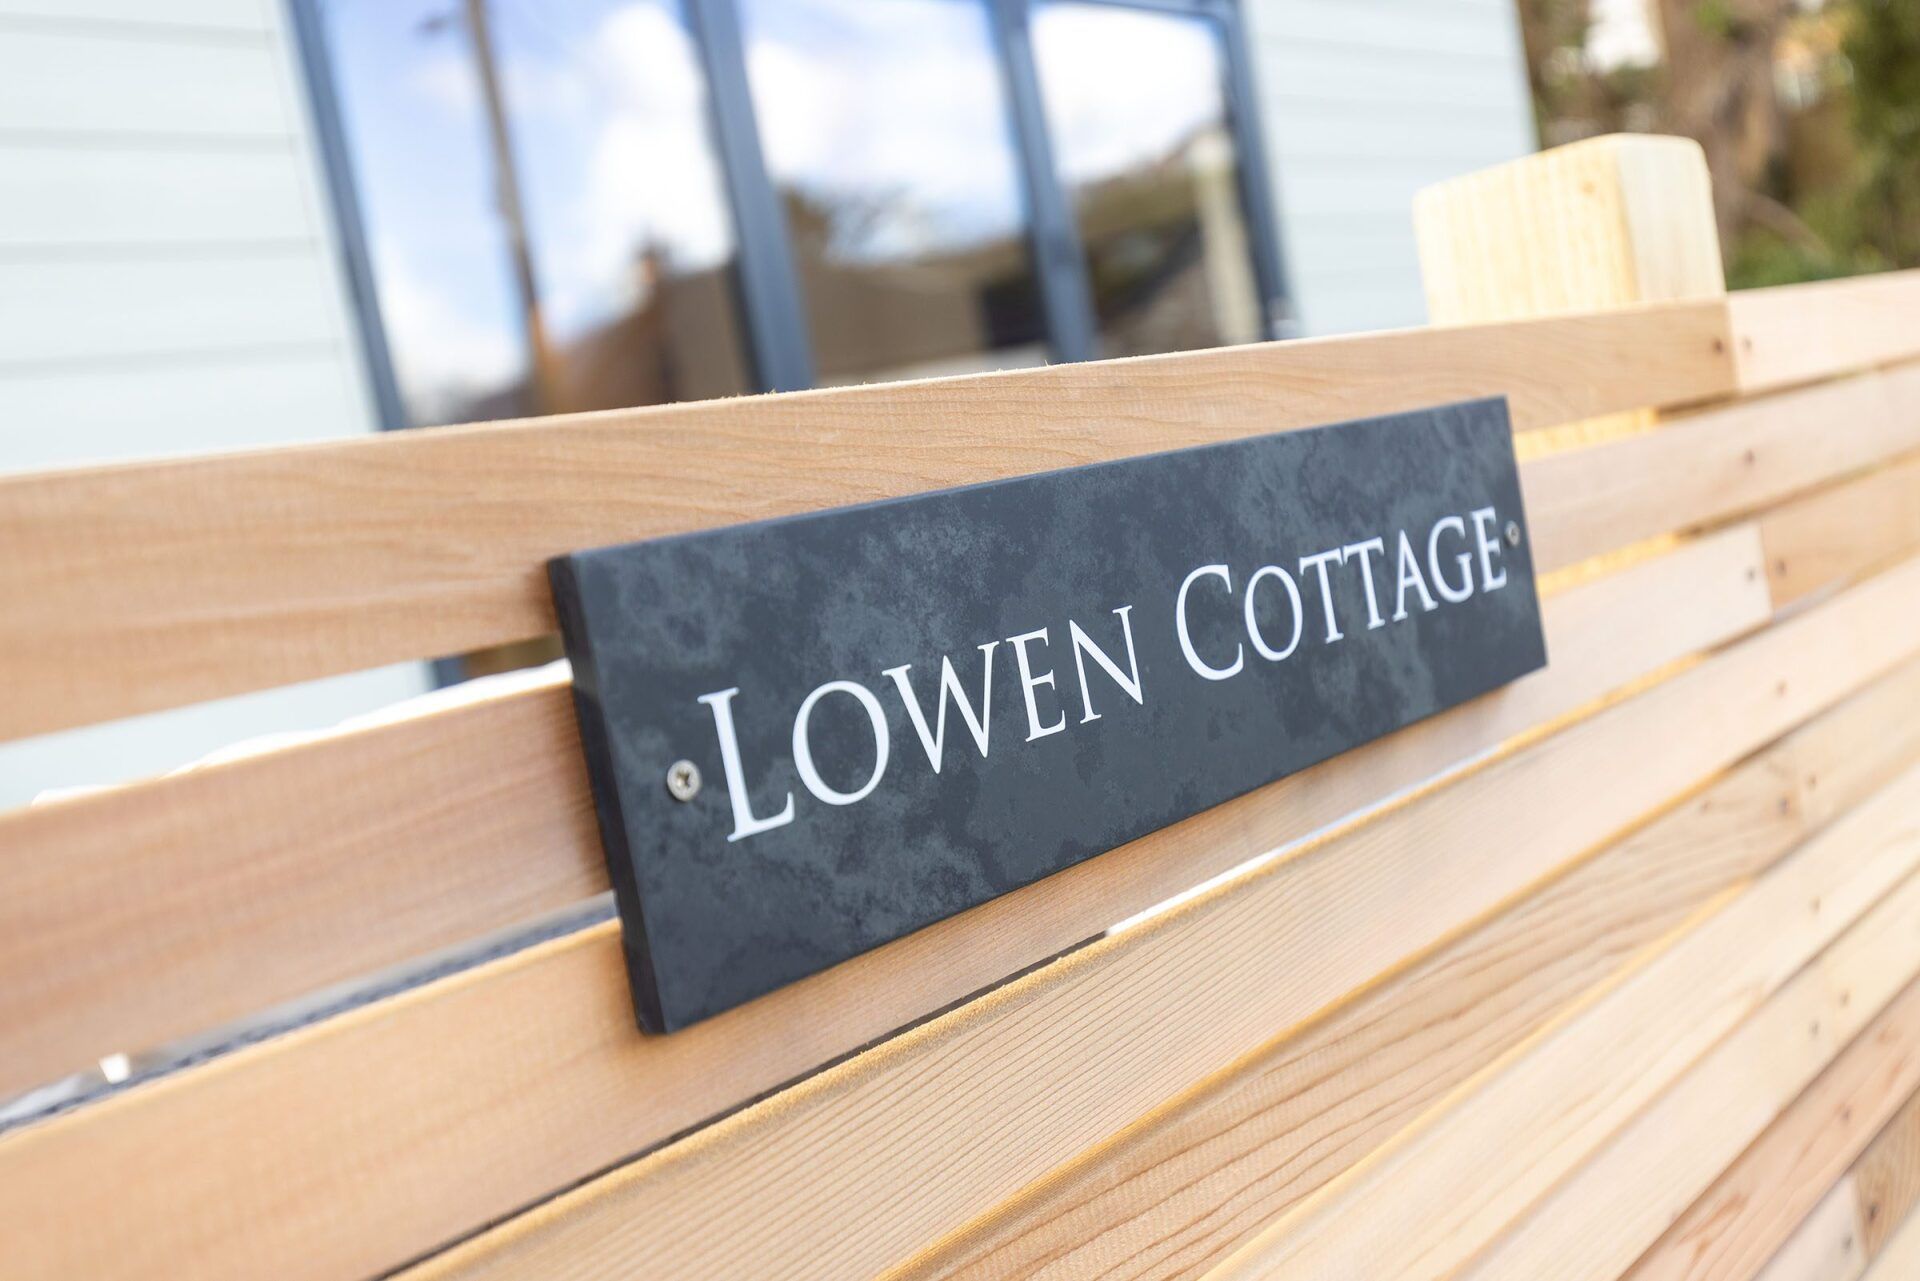 Lowen Cottage - sign